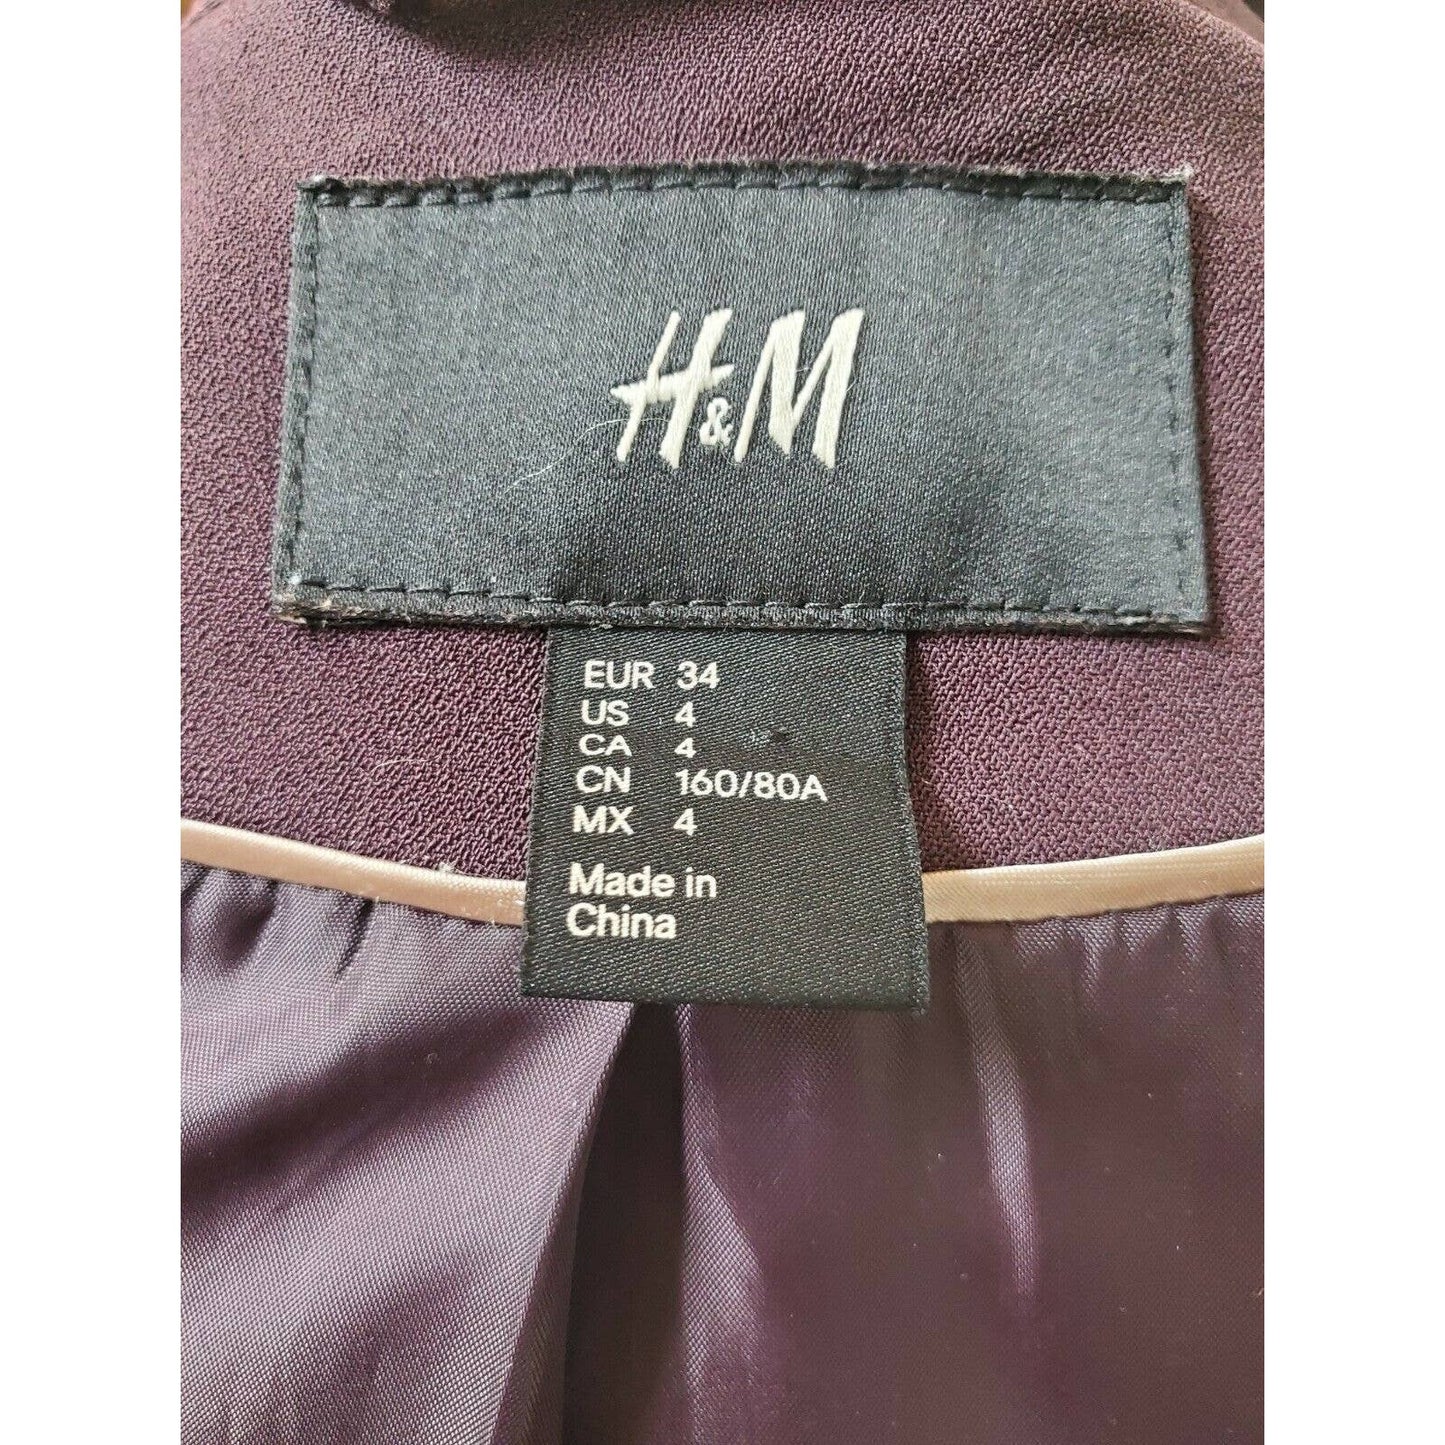 H & M Women's Purple Polyester Collared LongSleeve Slim Fit Formal Blazer Size 4